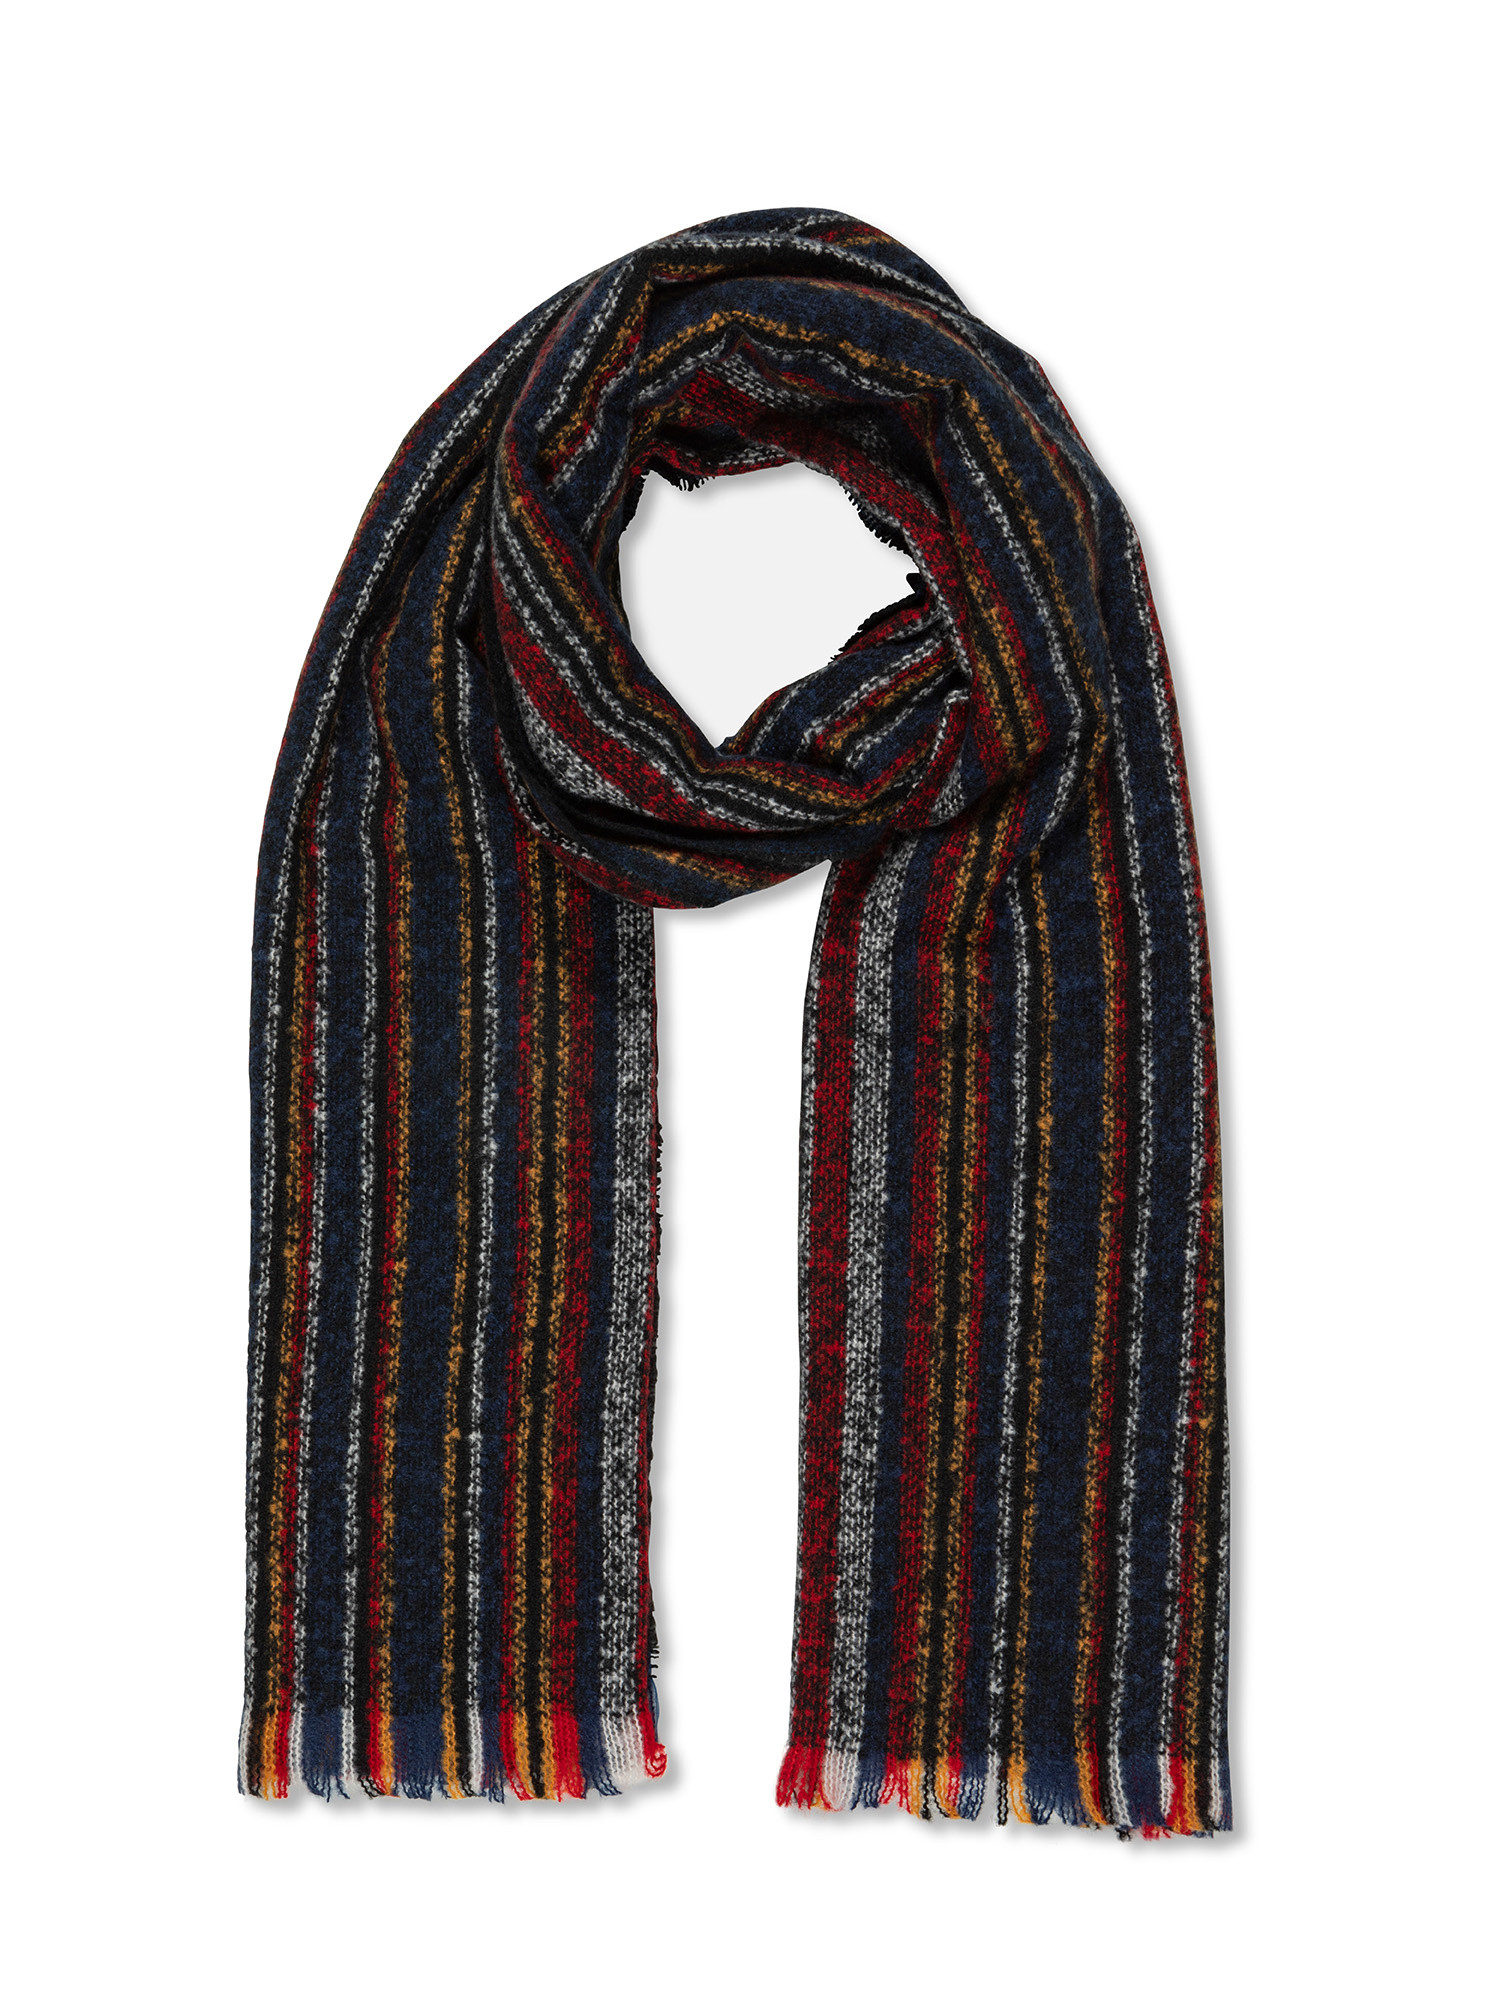 Luca D'Altieri - Striped scarf, Black, large image number 0